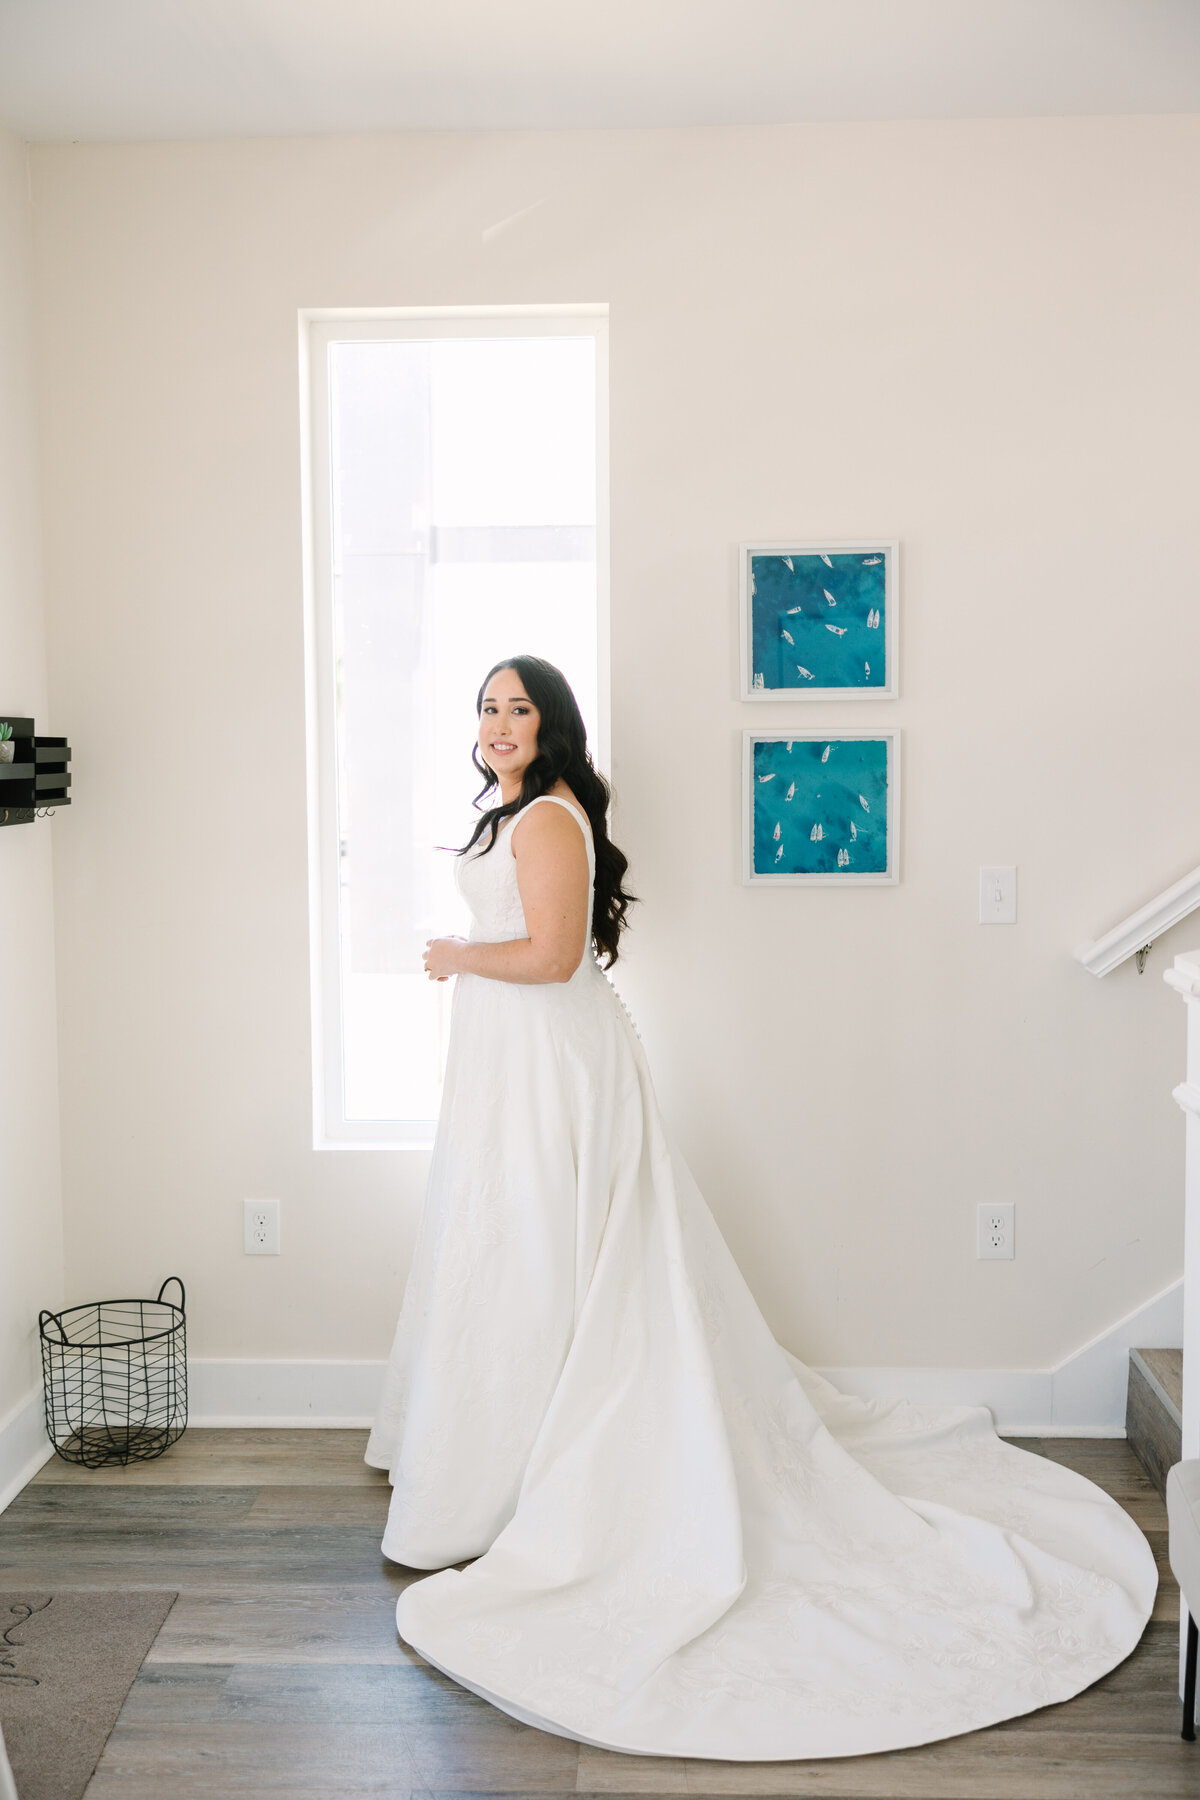 LAURA PEREZ PHOTOGRAPHY LLC Alejandra & michael Oldest house and 9 aviles st augustine weddings-17